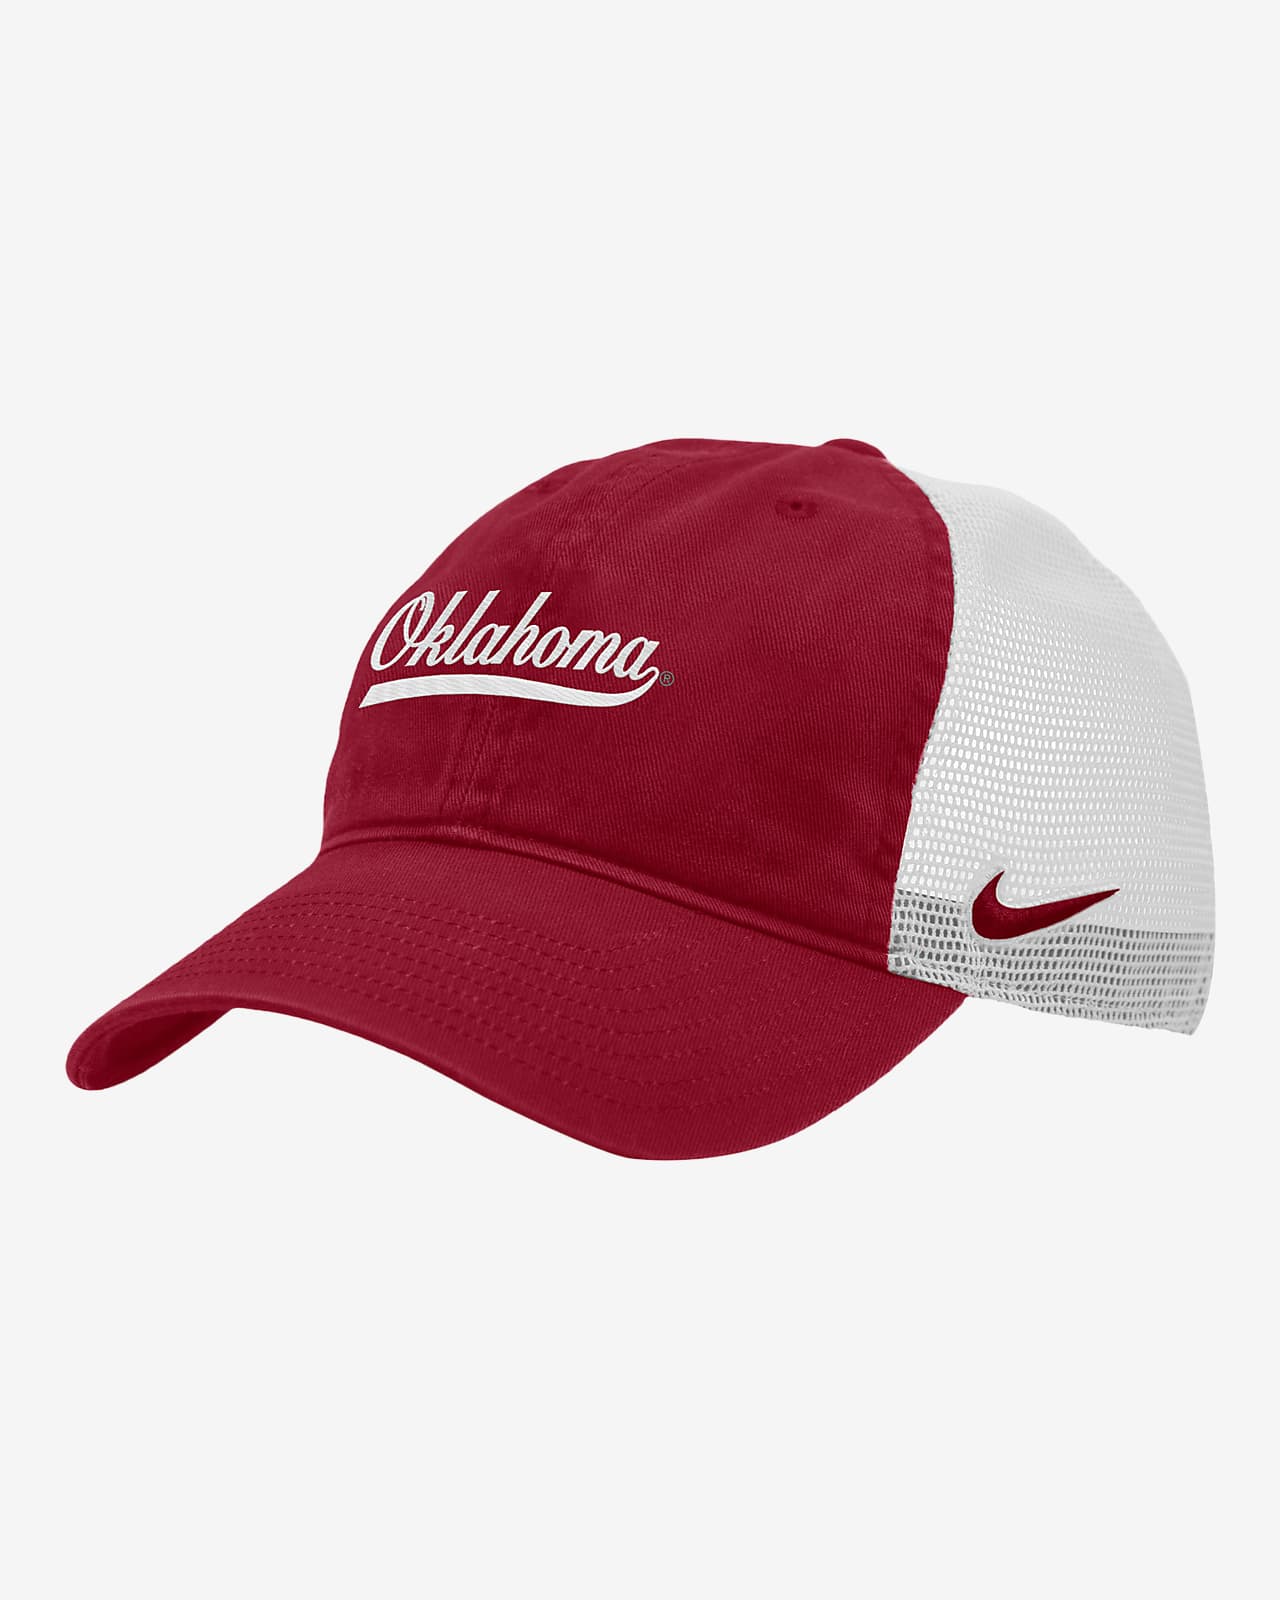 Oklahoma Heritage86 Nike College Trucker Hat